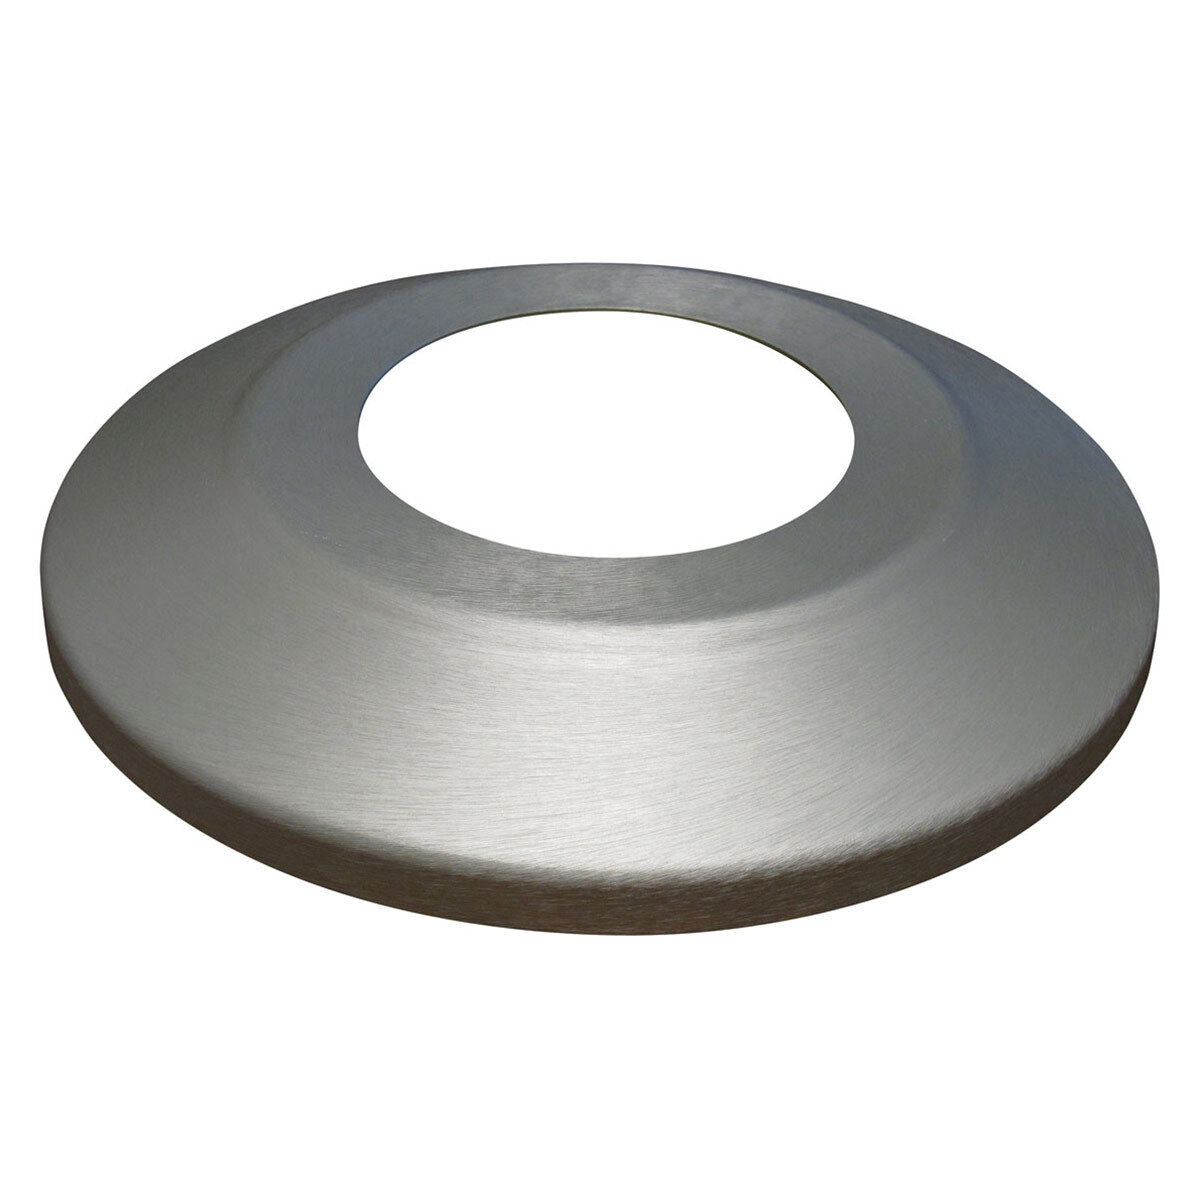 Collar de destello de aluminio plateado anodizado transparente para mástiles de bandera - Perfil estándar - Grosor de pared .060 - Tamaños variados